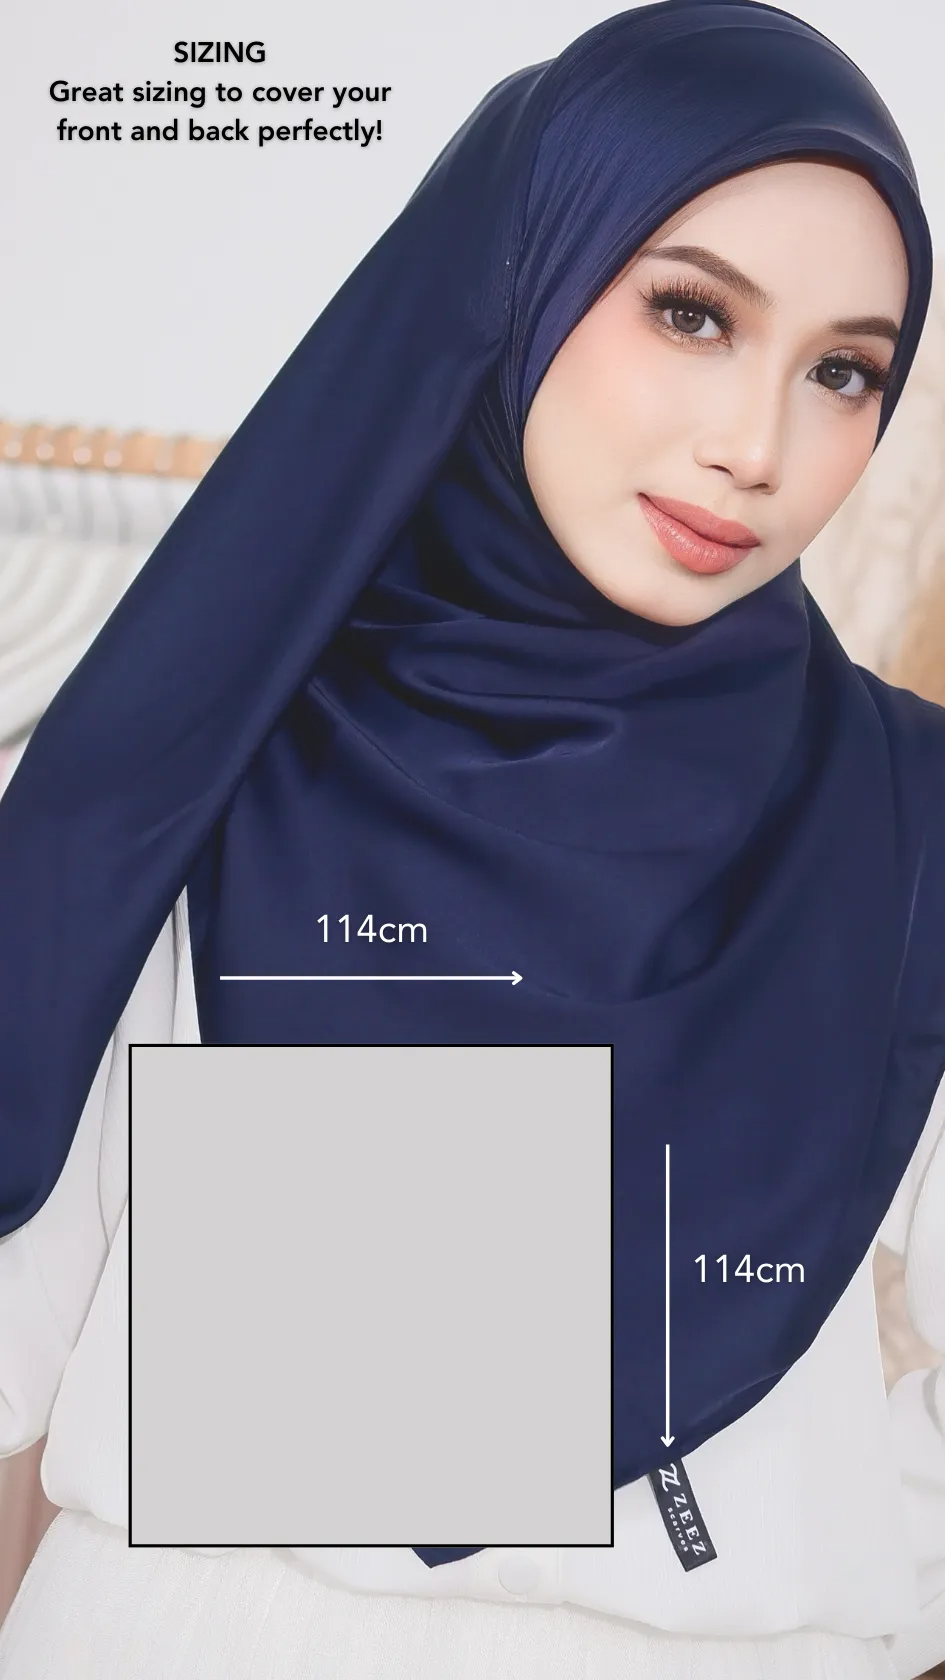 Introducing our Exquisite Matte Satin Silk Hijab